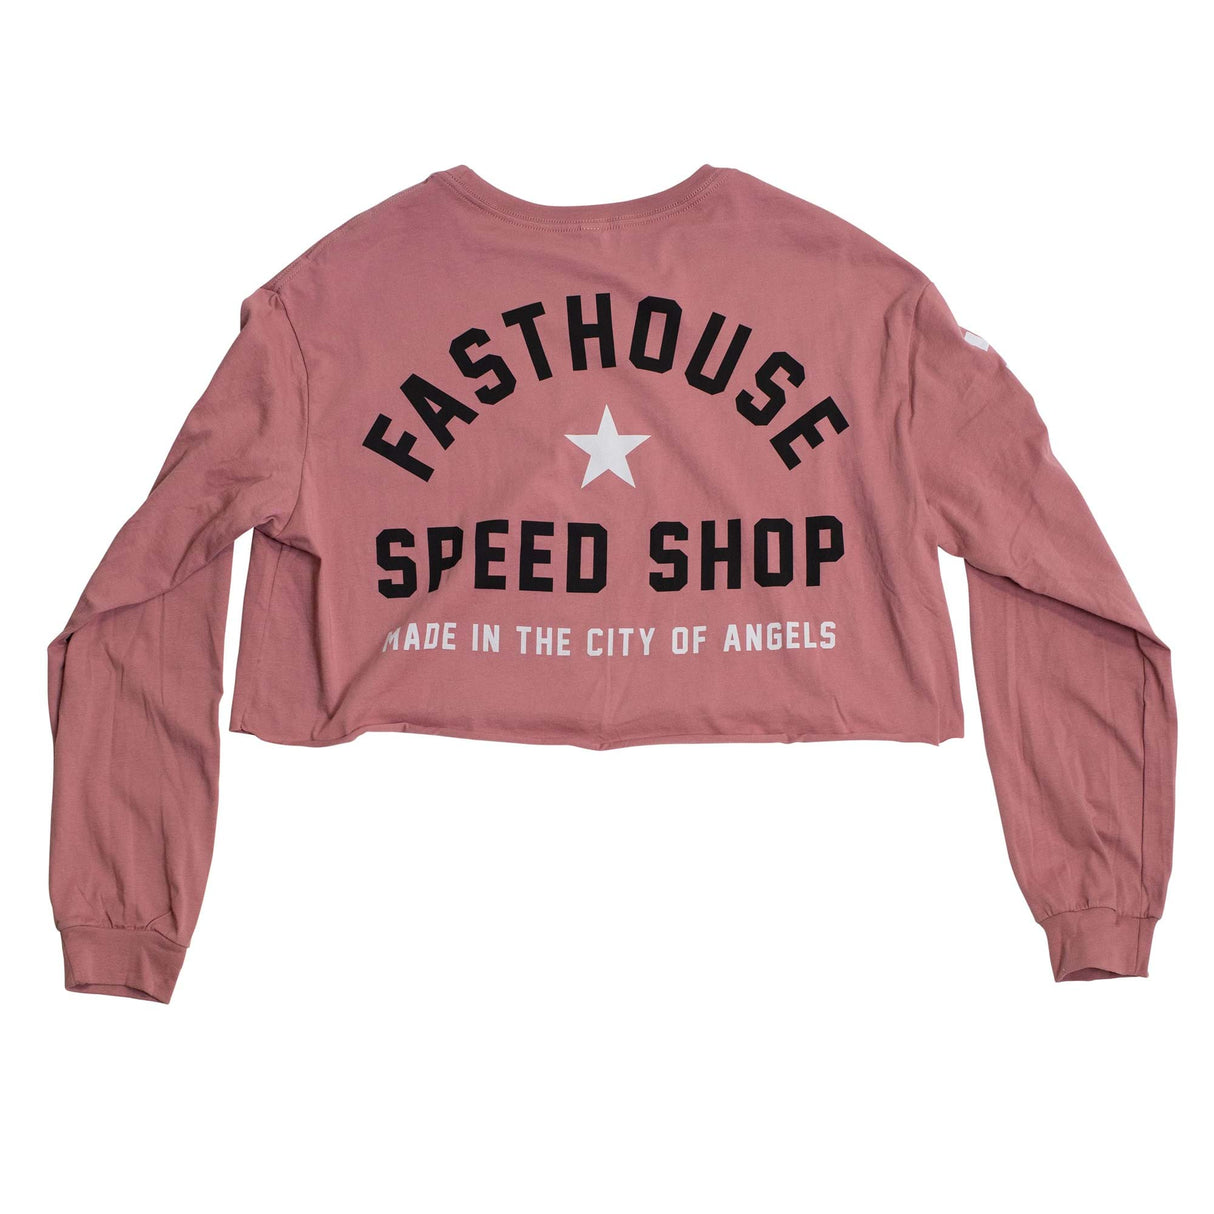 Fasthouse T-shirt court Star LS pour femme